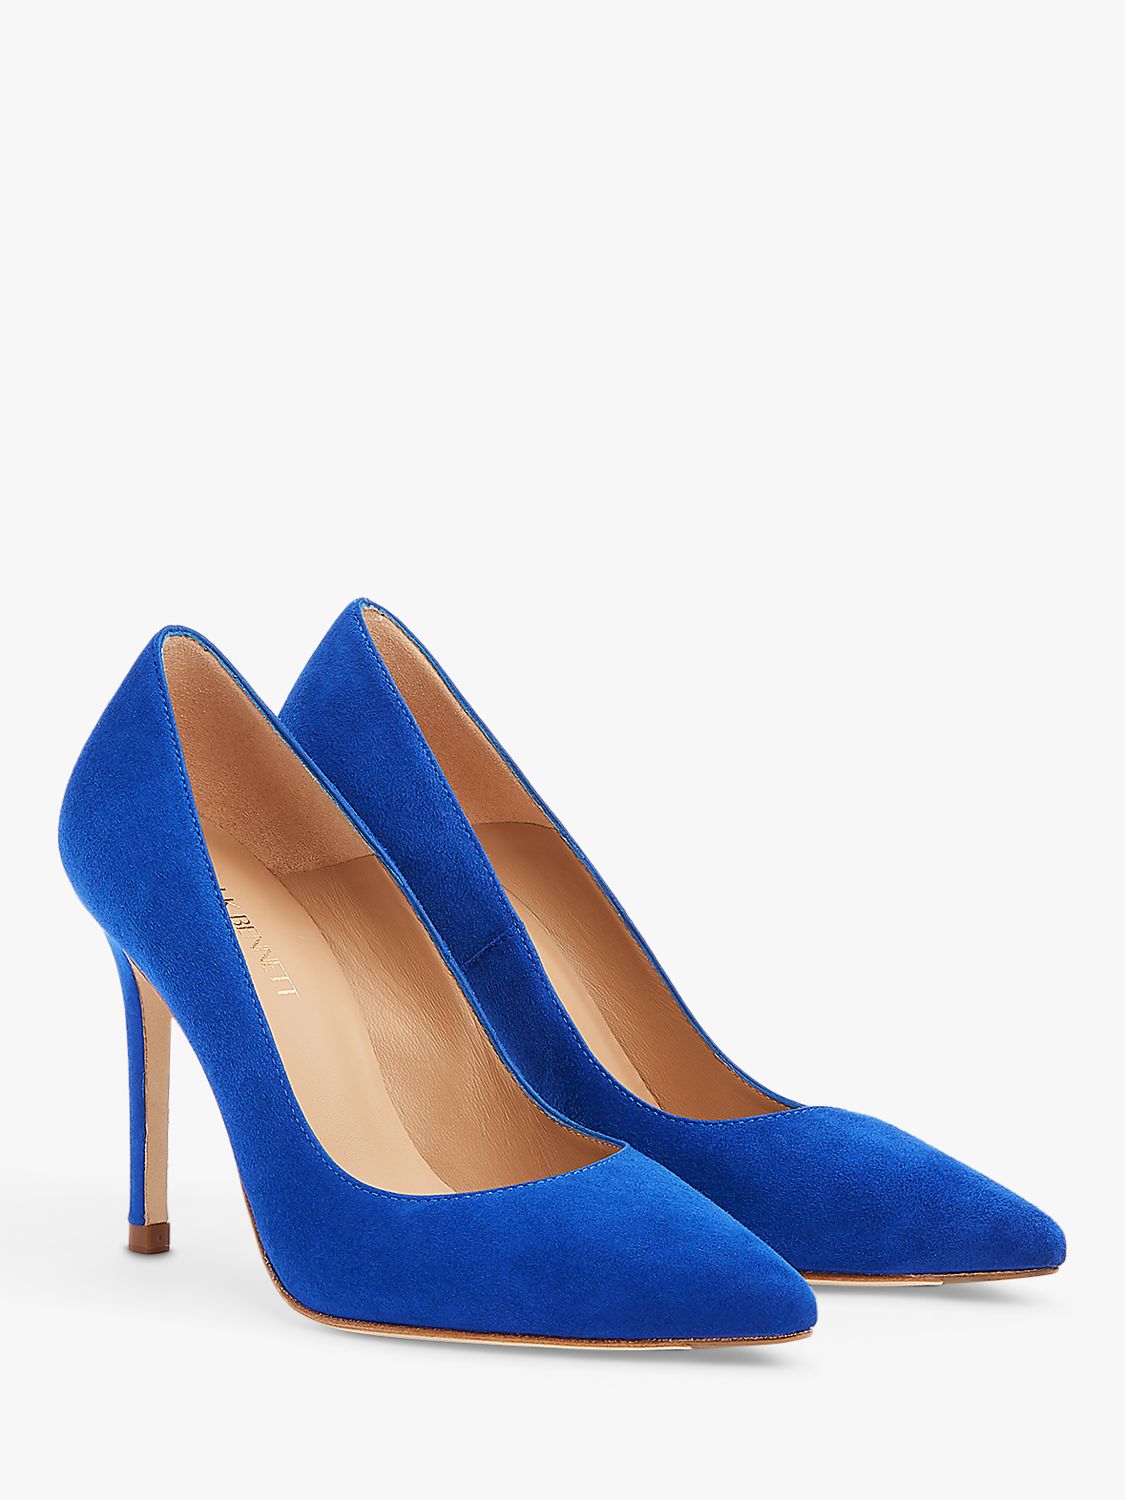 L.K.Bennett Fern Court Shoes, Blue Suede at John Lewis & Partners